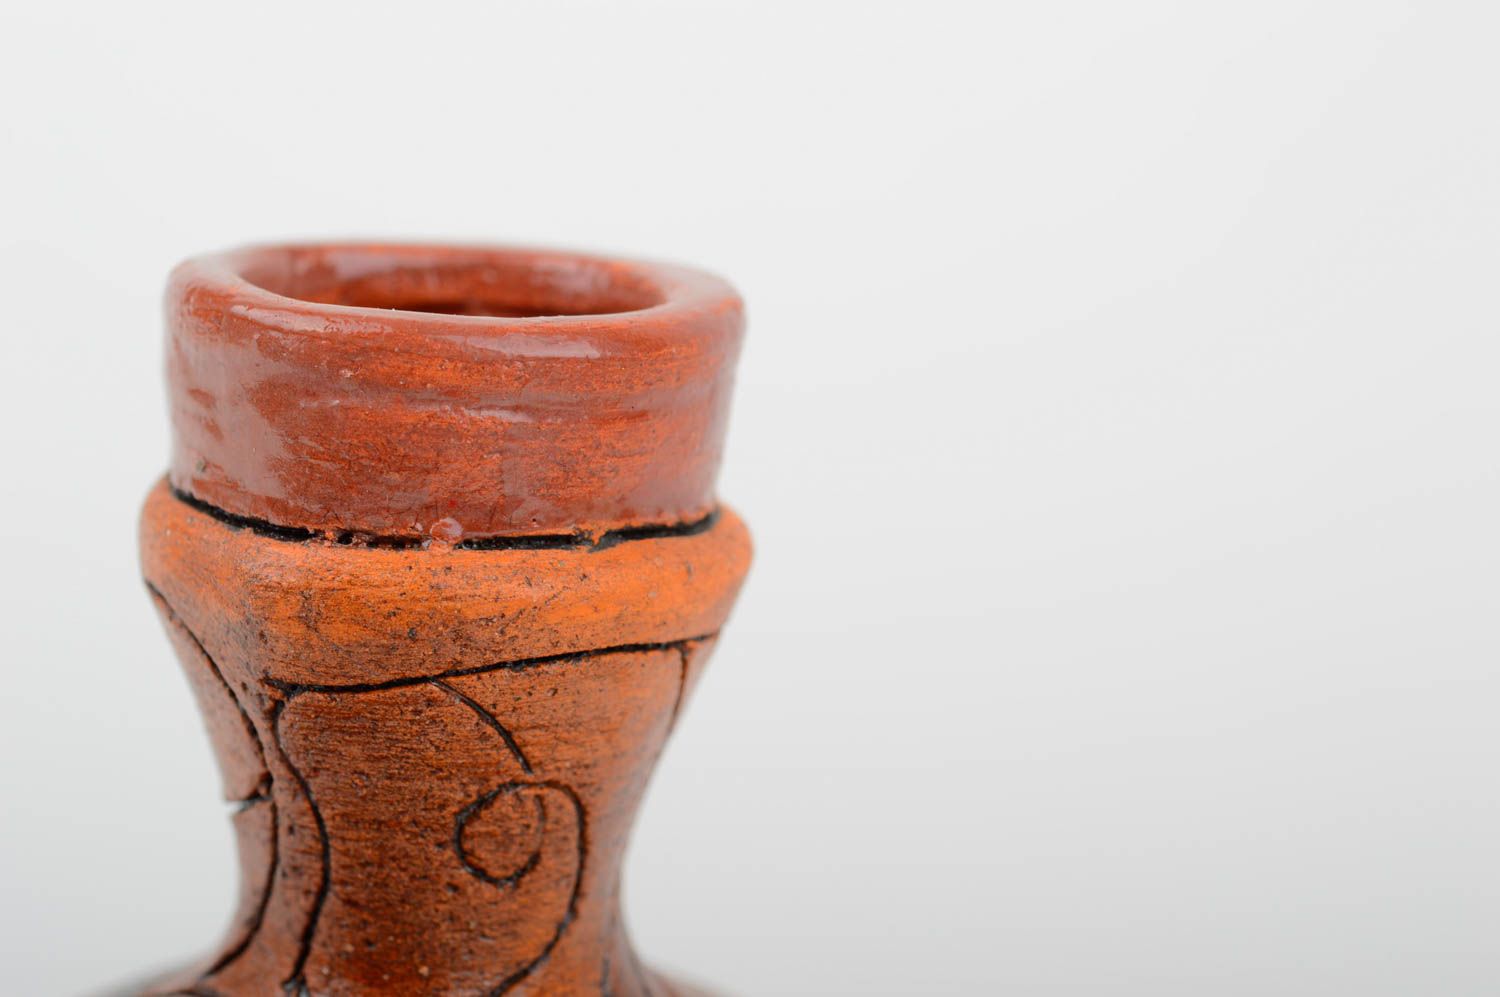 15 oz ceramic wine pitcher in ball shape 0,67 lb photo 4